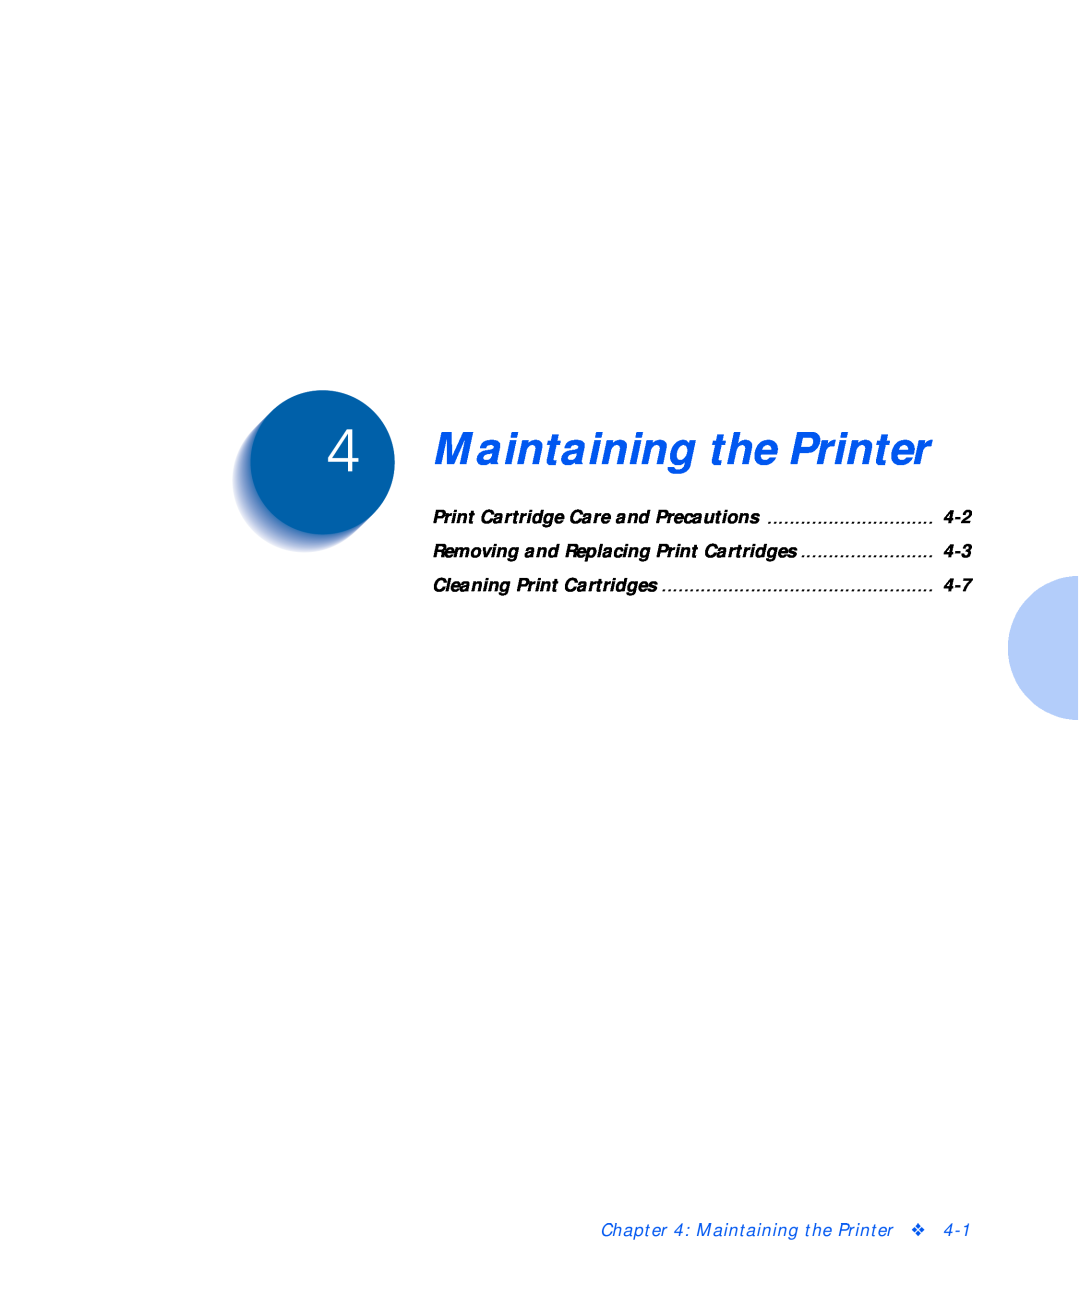 Xerox C15 manual Maintaining the Printer, Print Cartridge Care and Precautions, Removing and Replacing Print Cartridges 